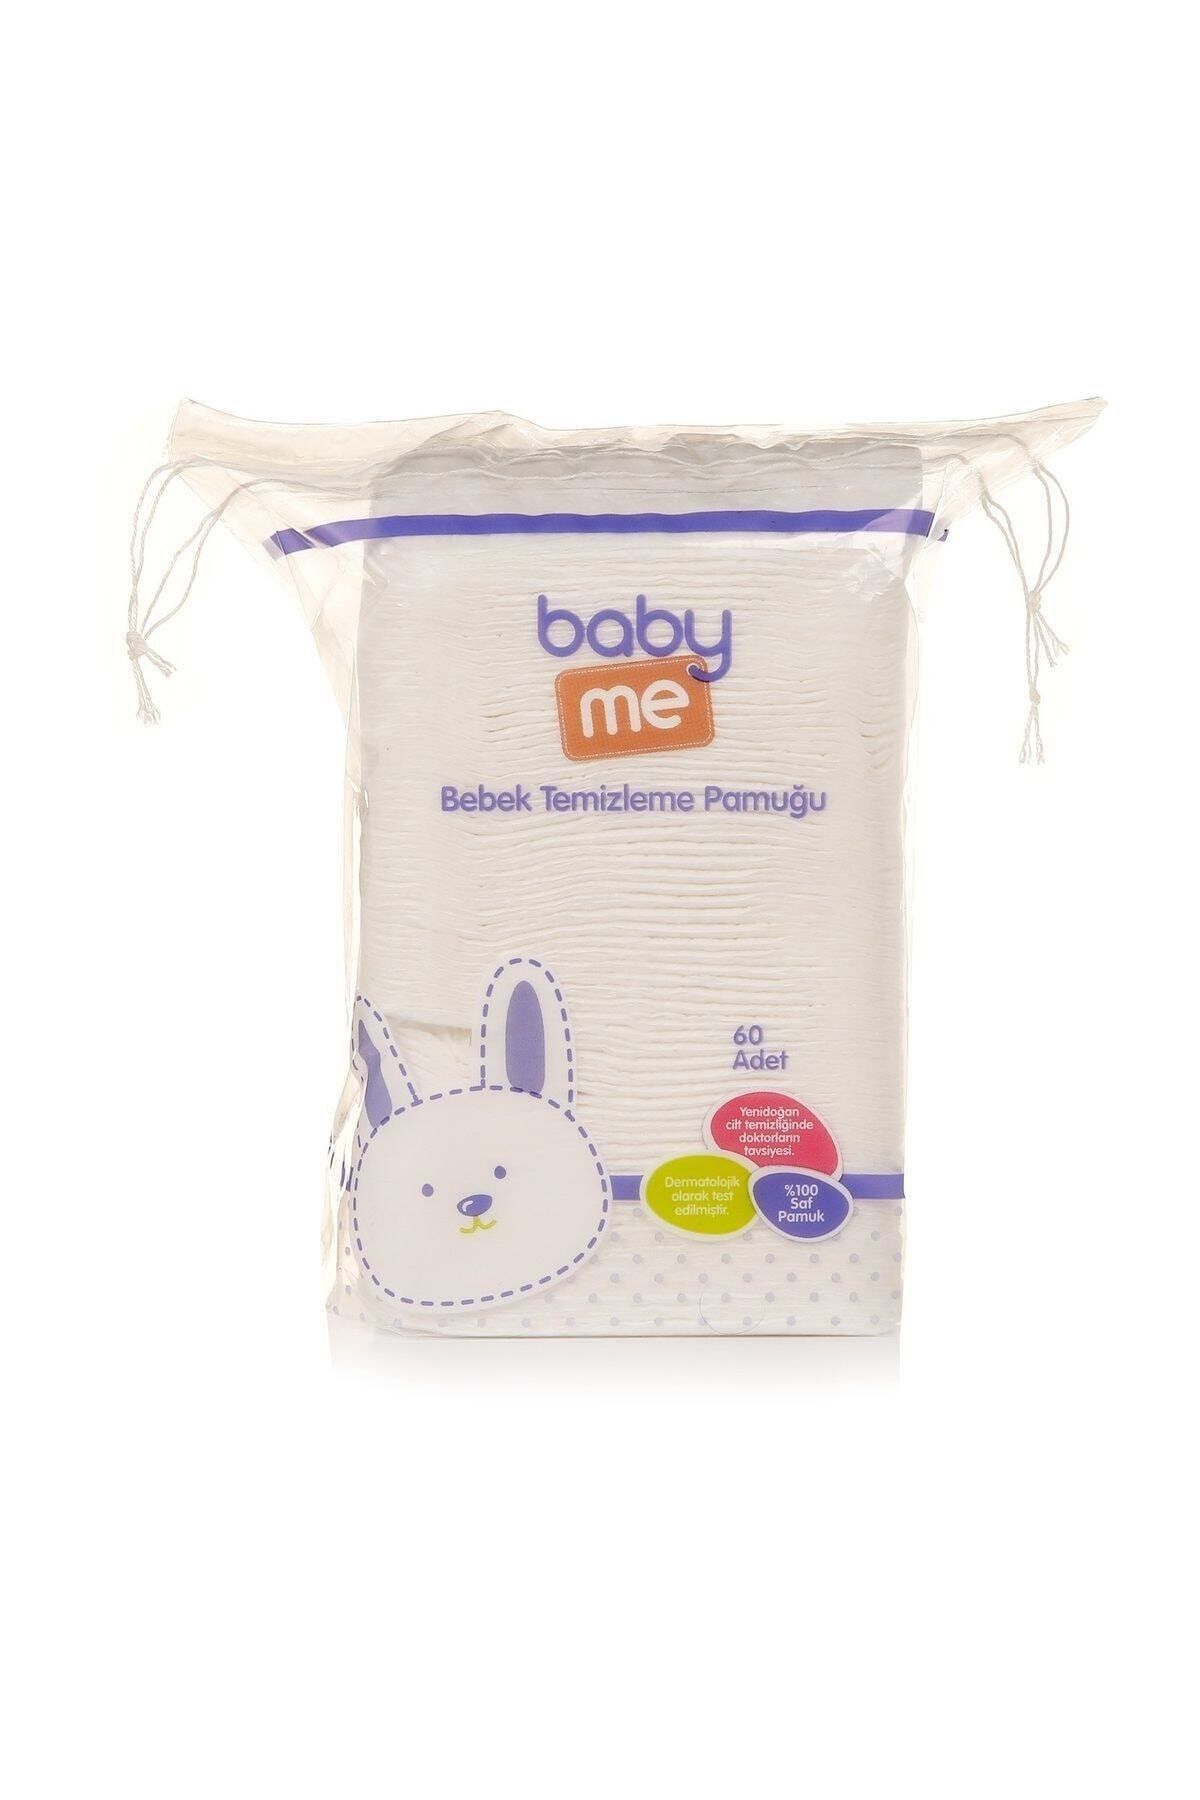 Baby Me Bebek Temizleme Pamuğu 60 Adet Bae-20017